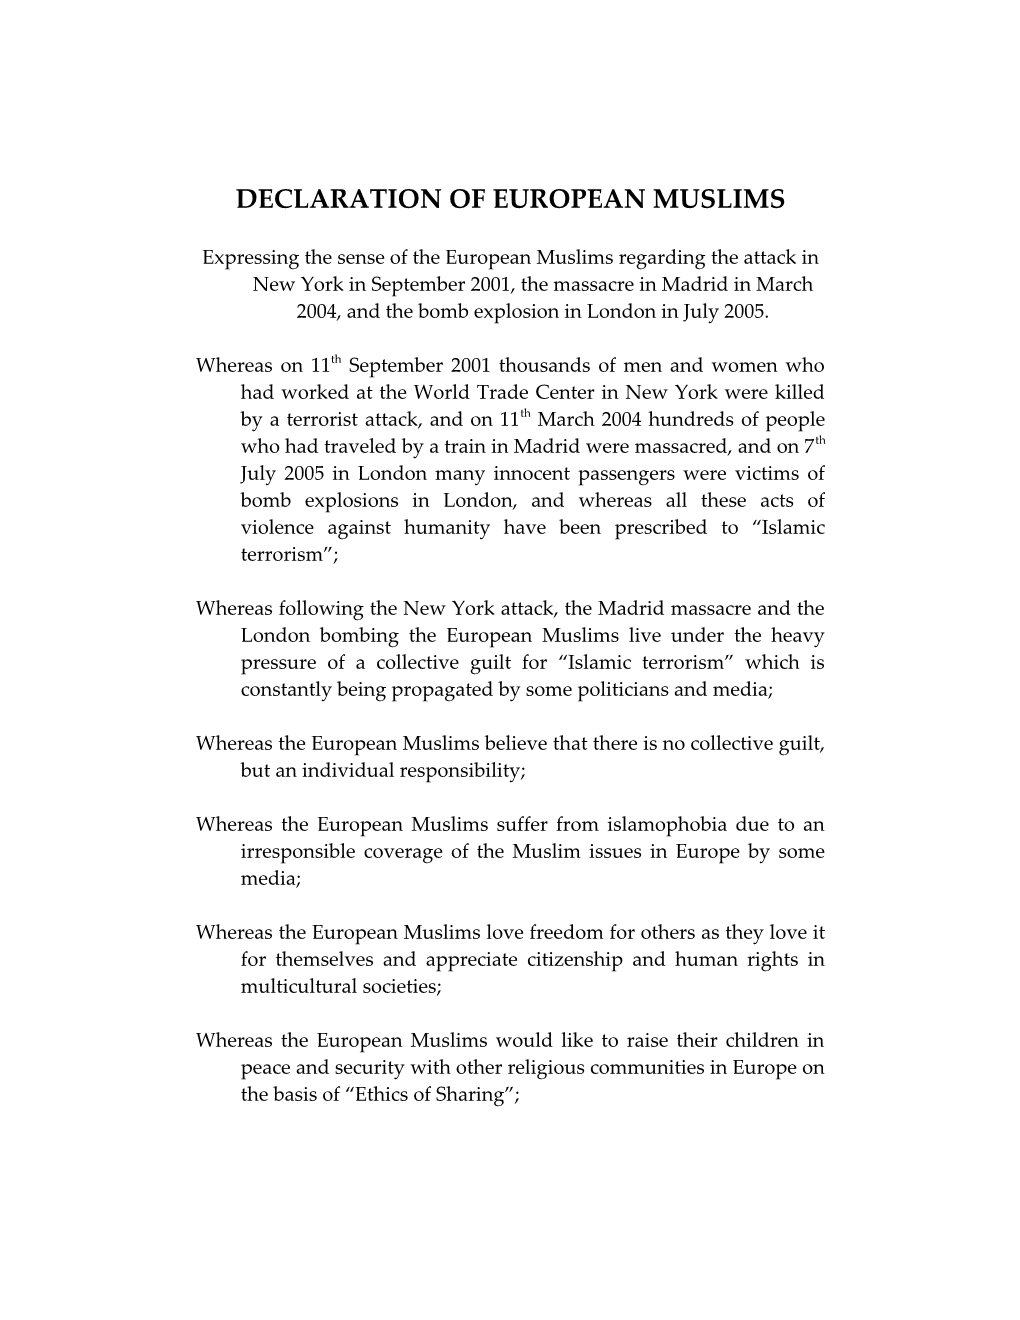 Declaration of European Muslims